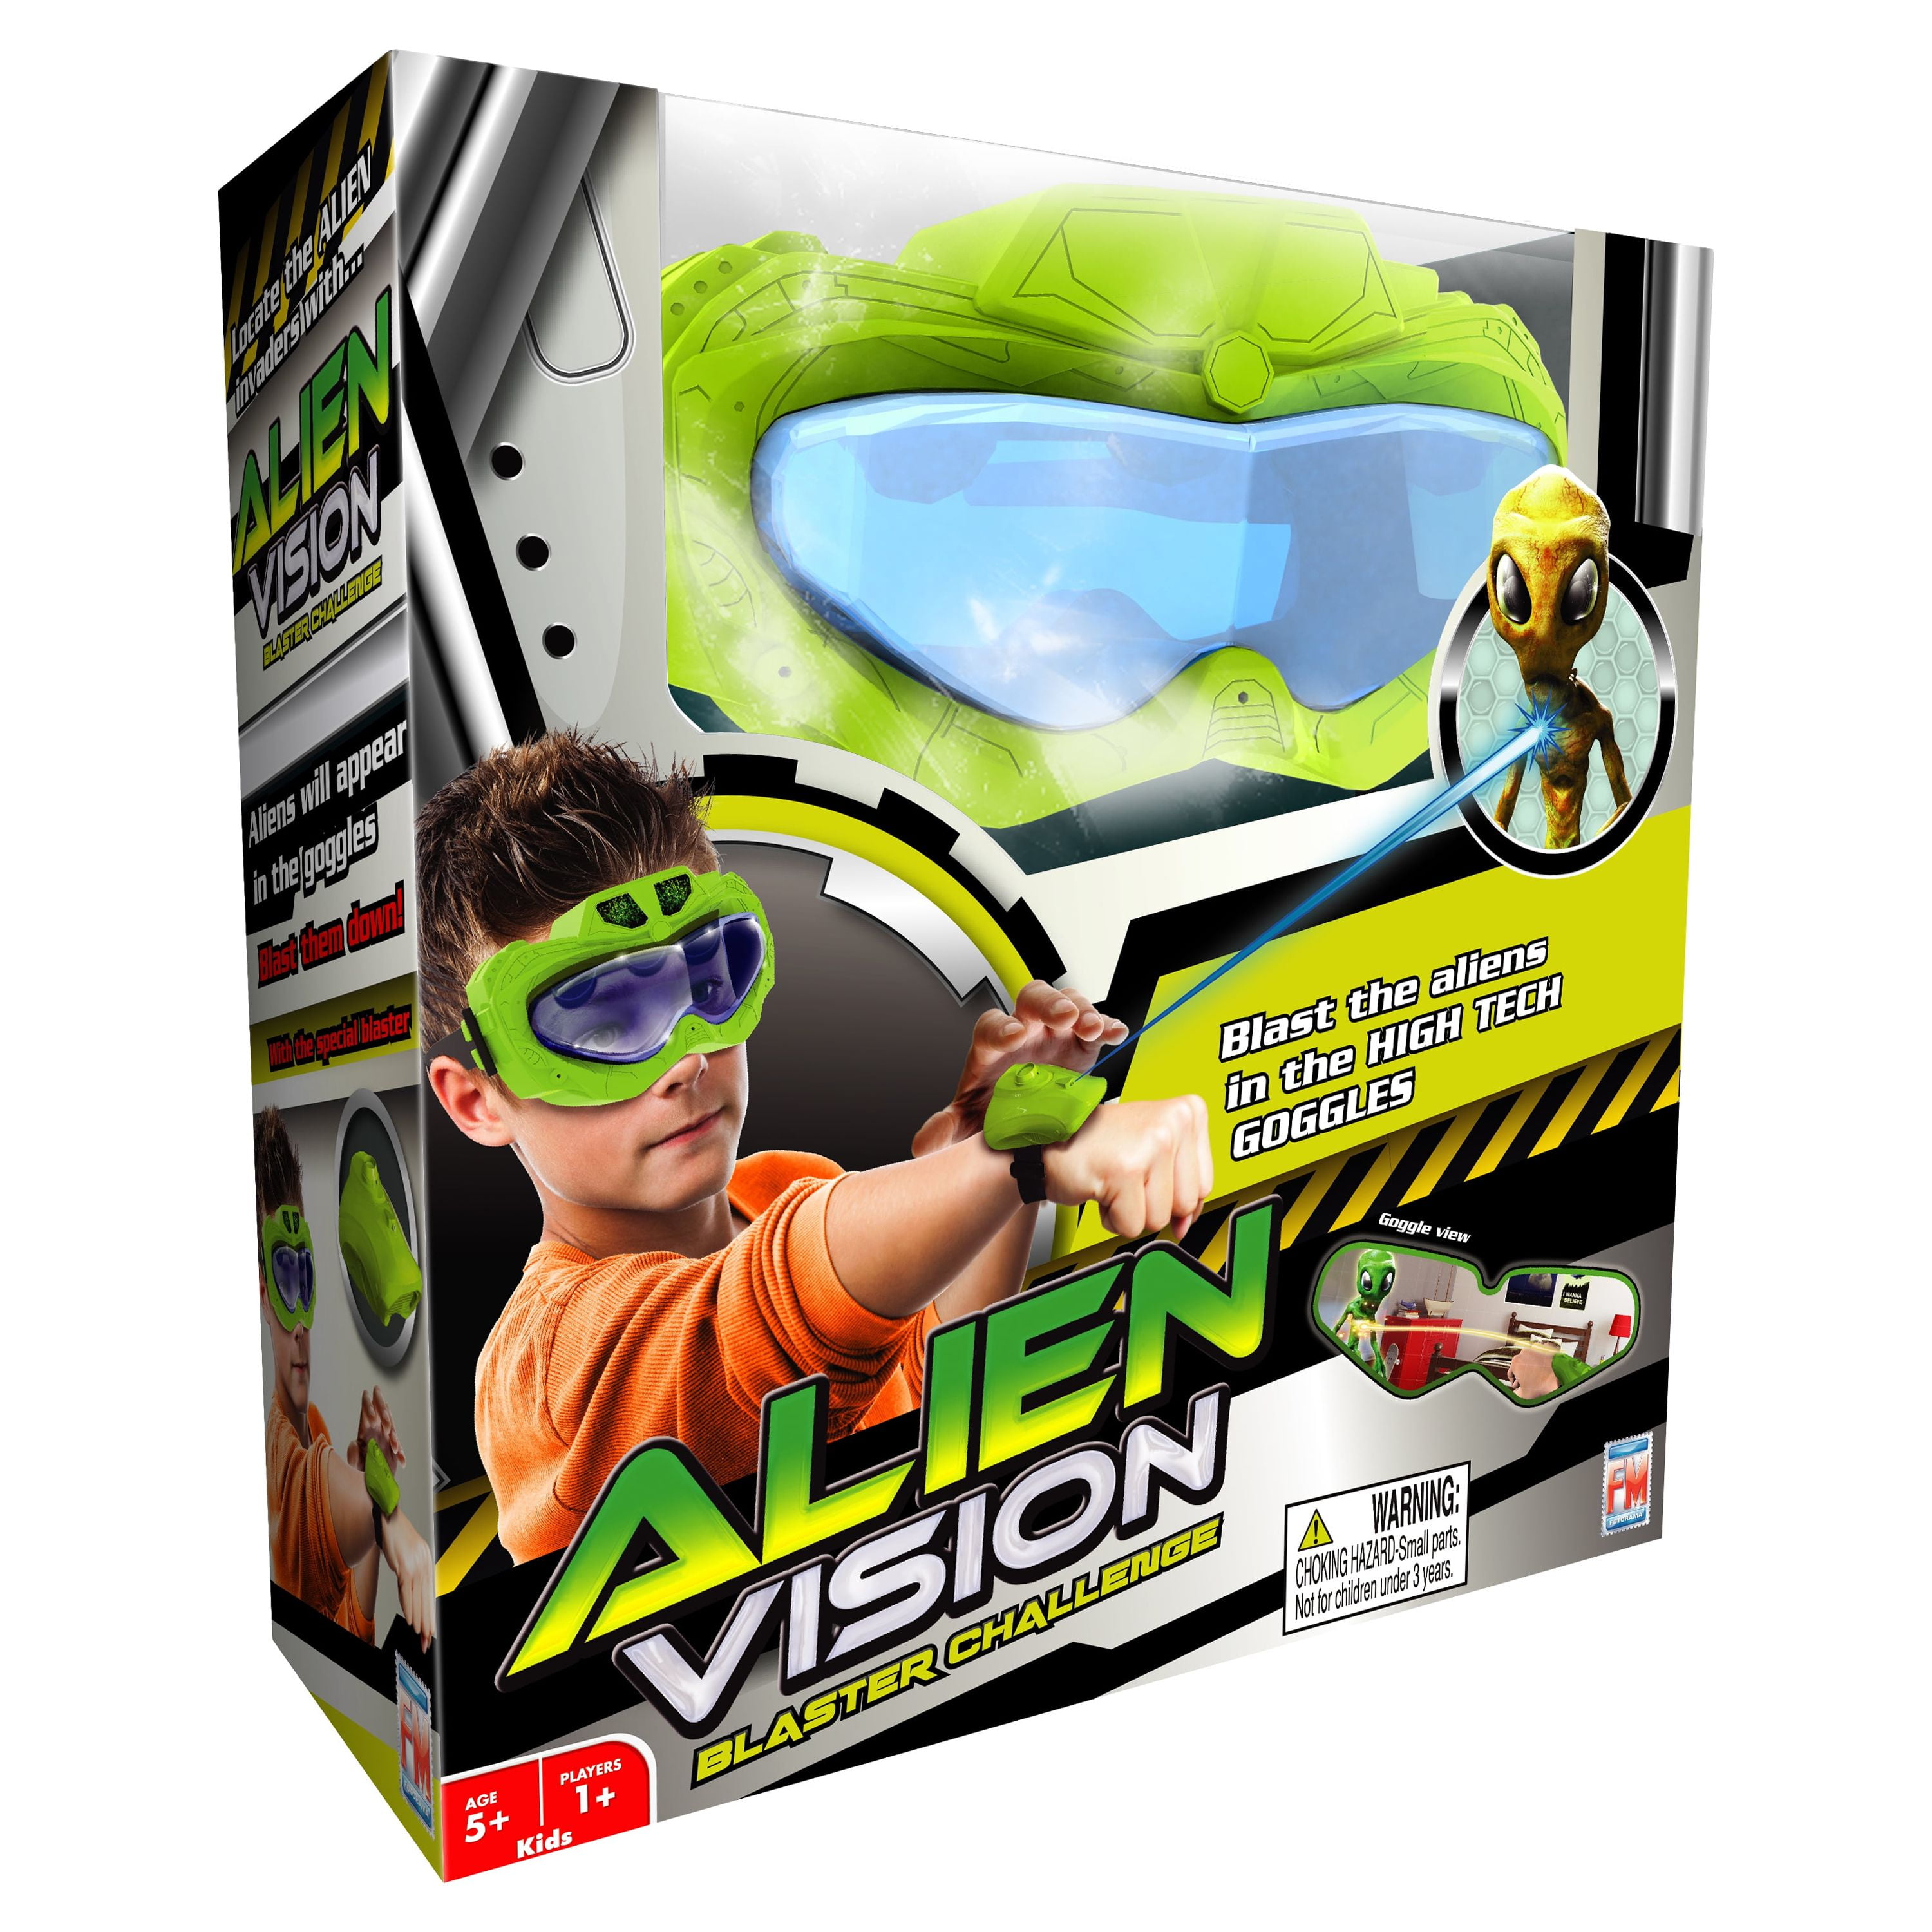 Buy cheap Alien Vision cd key - lowest price